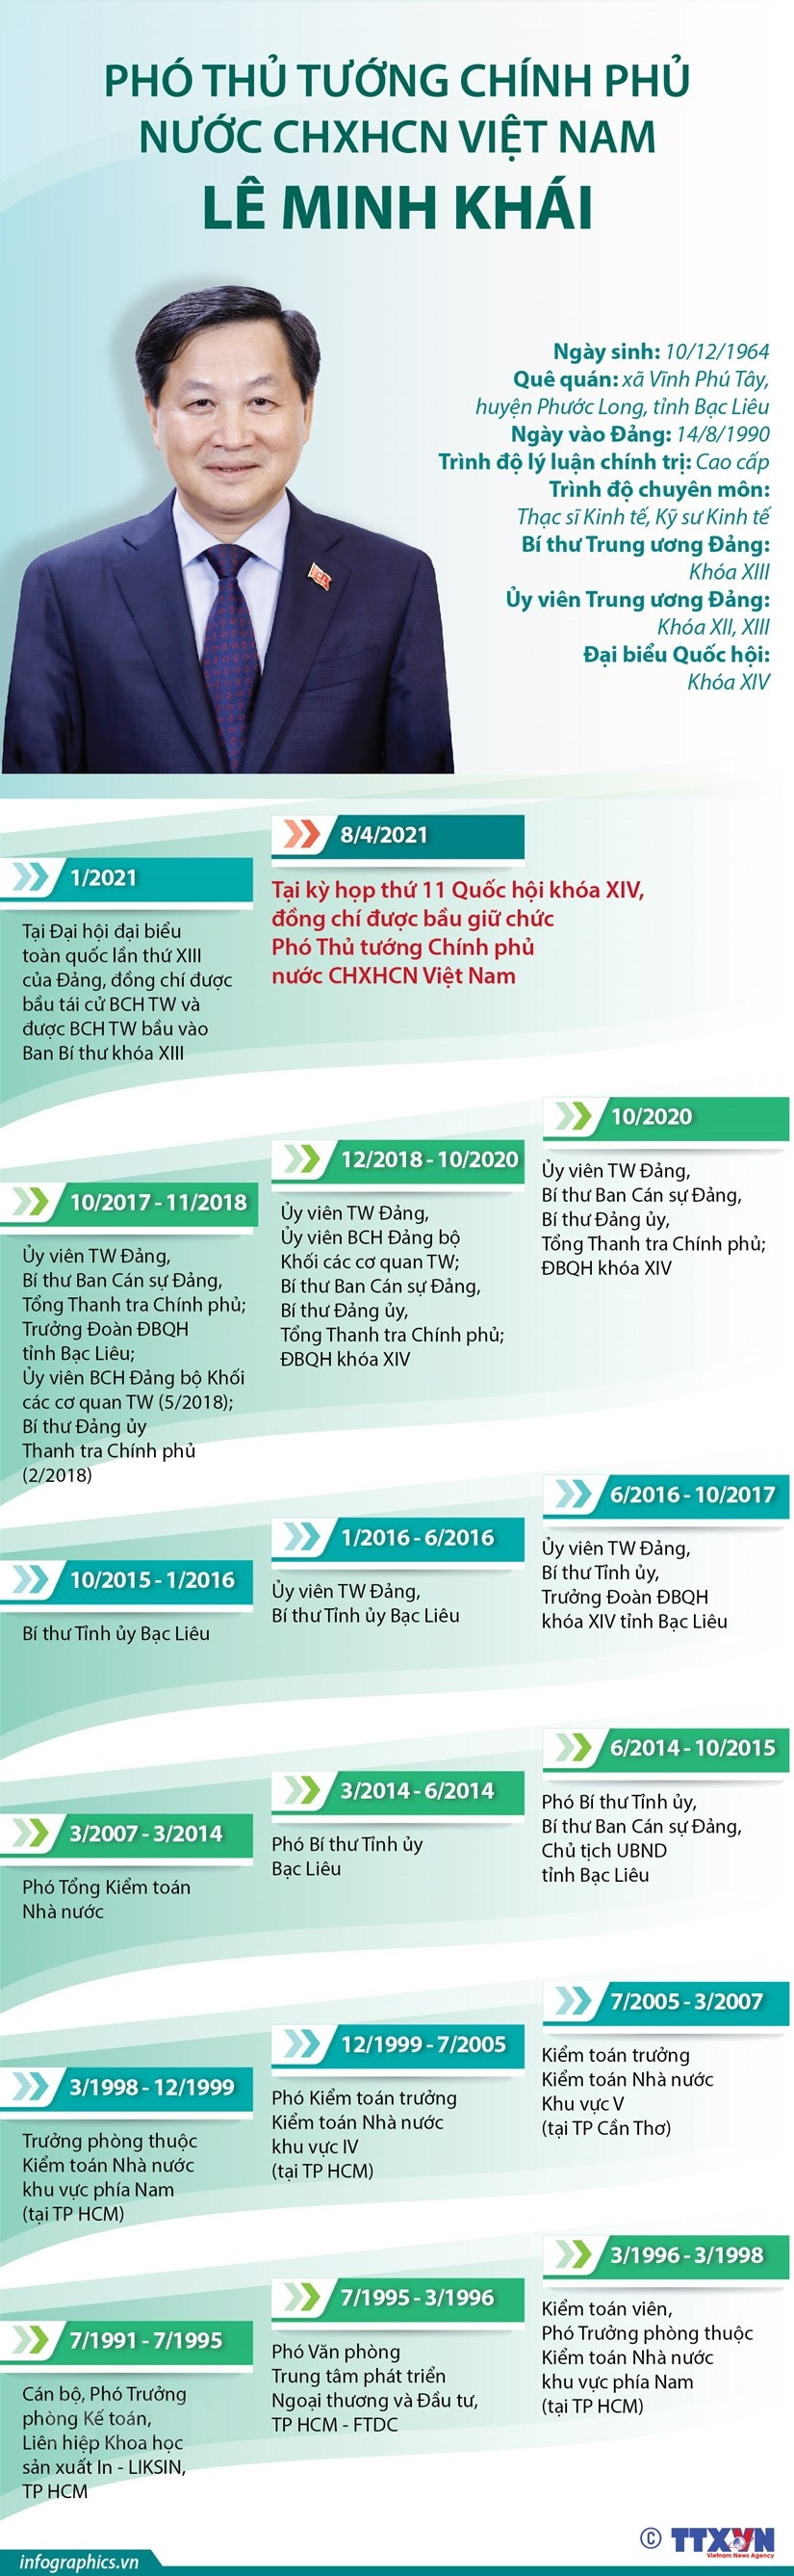 [Infographics] Tieu su tan Pho Thu tuong Chinh phu Le Minh Khai hinh anh 1